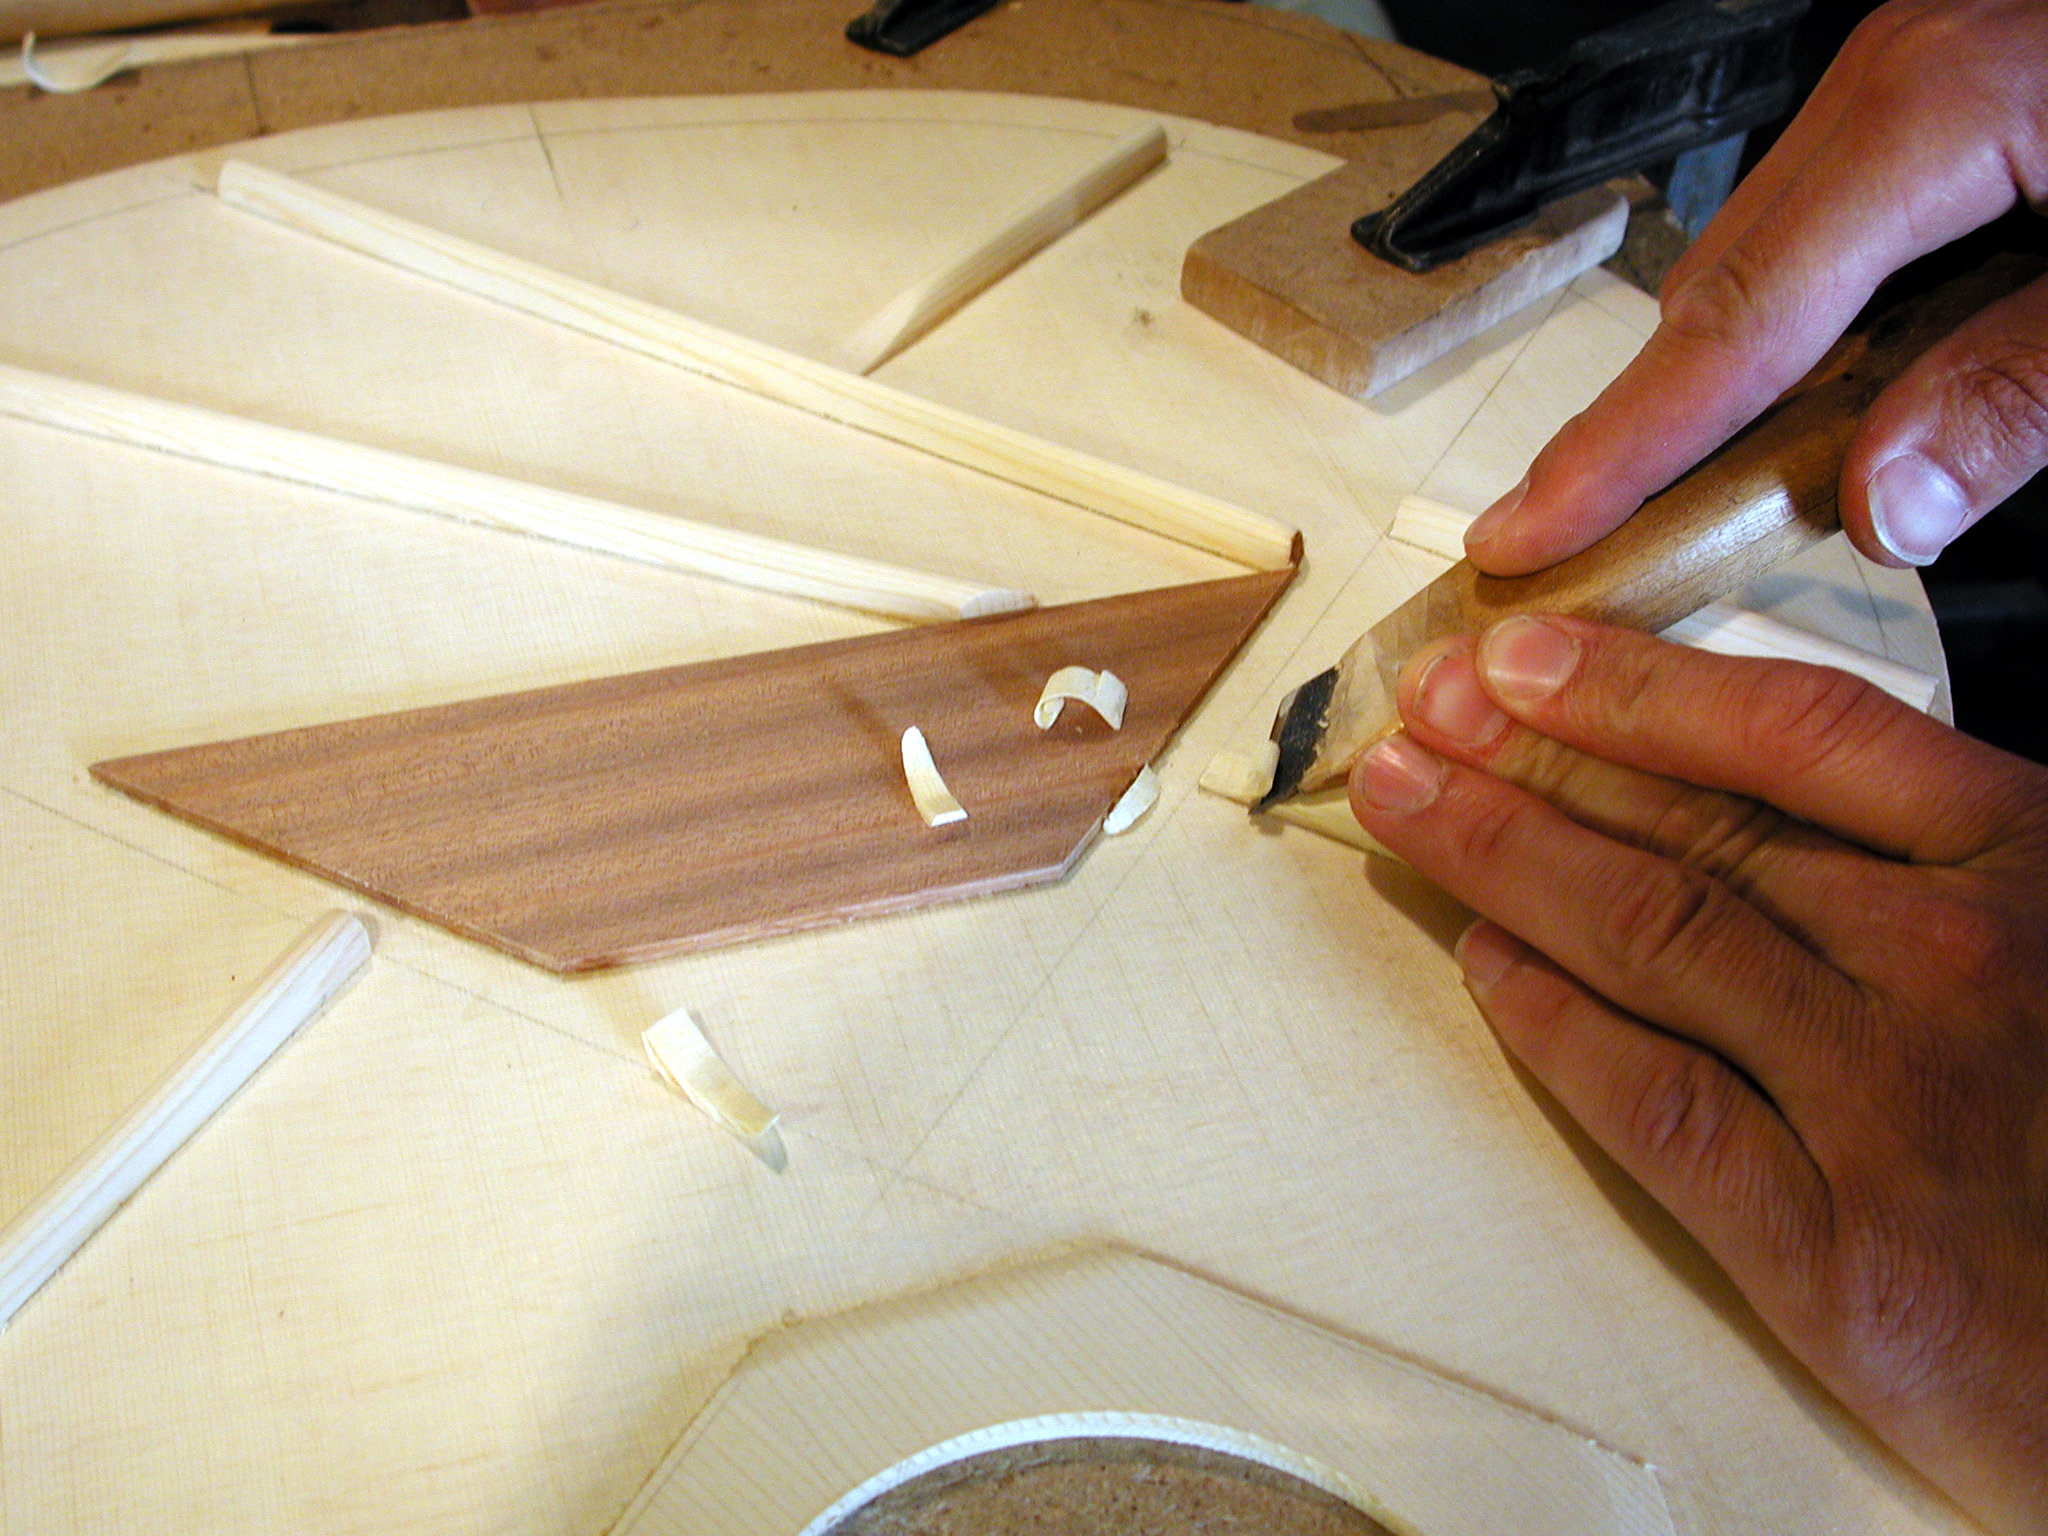 Bracing: The bracing is being carved.